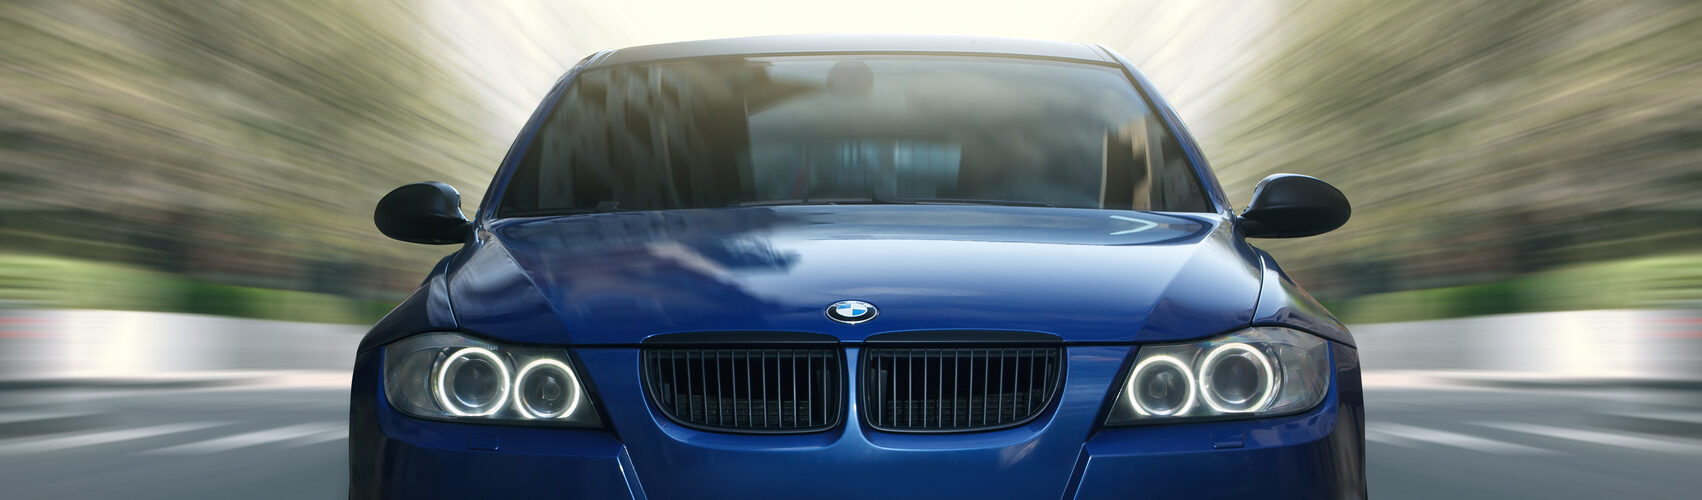 Pimp Your Ride…BMW 5 Series Review